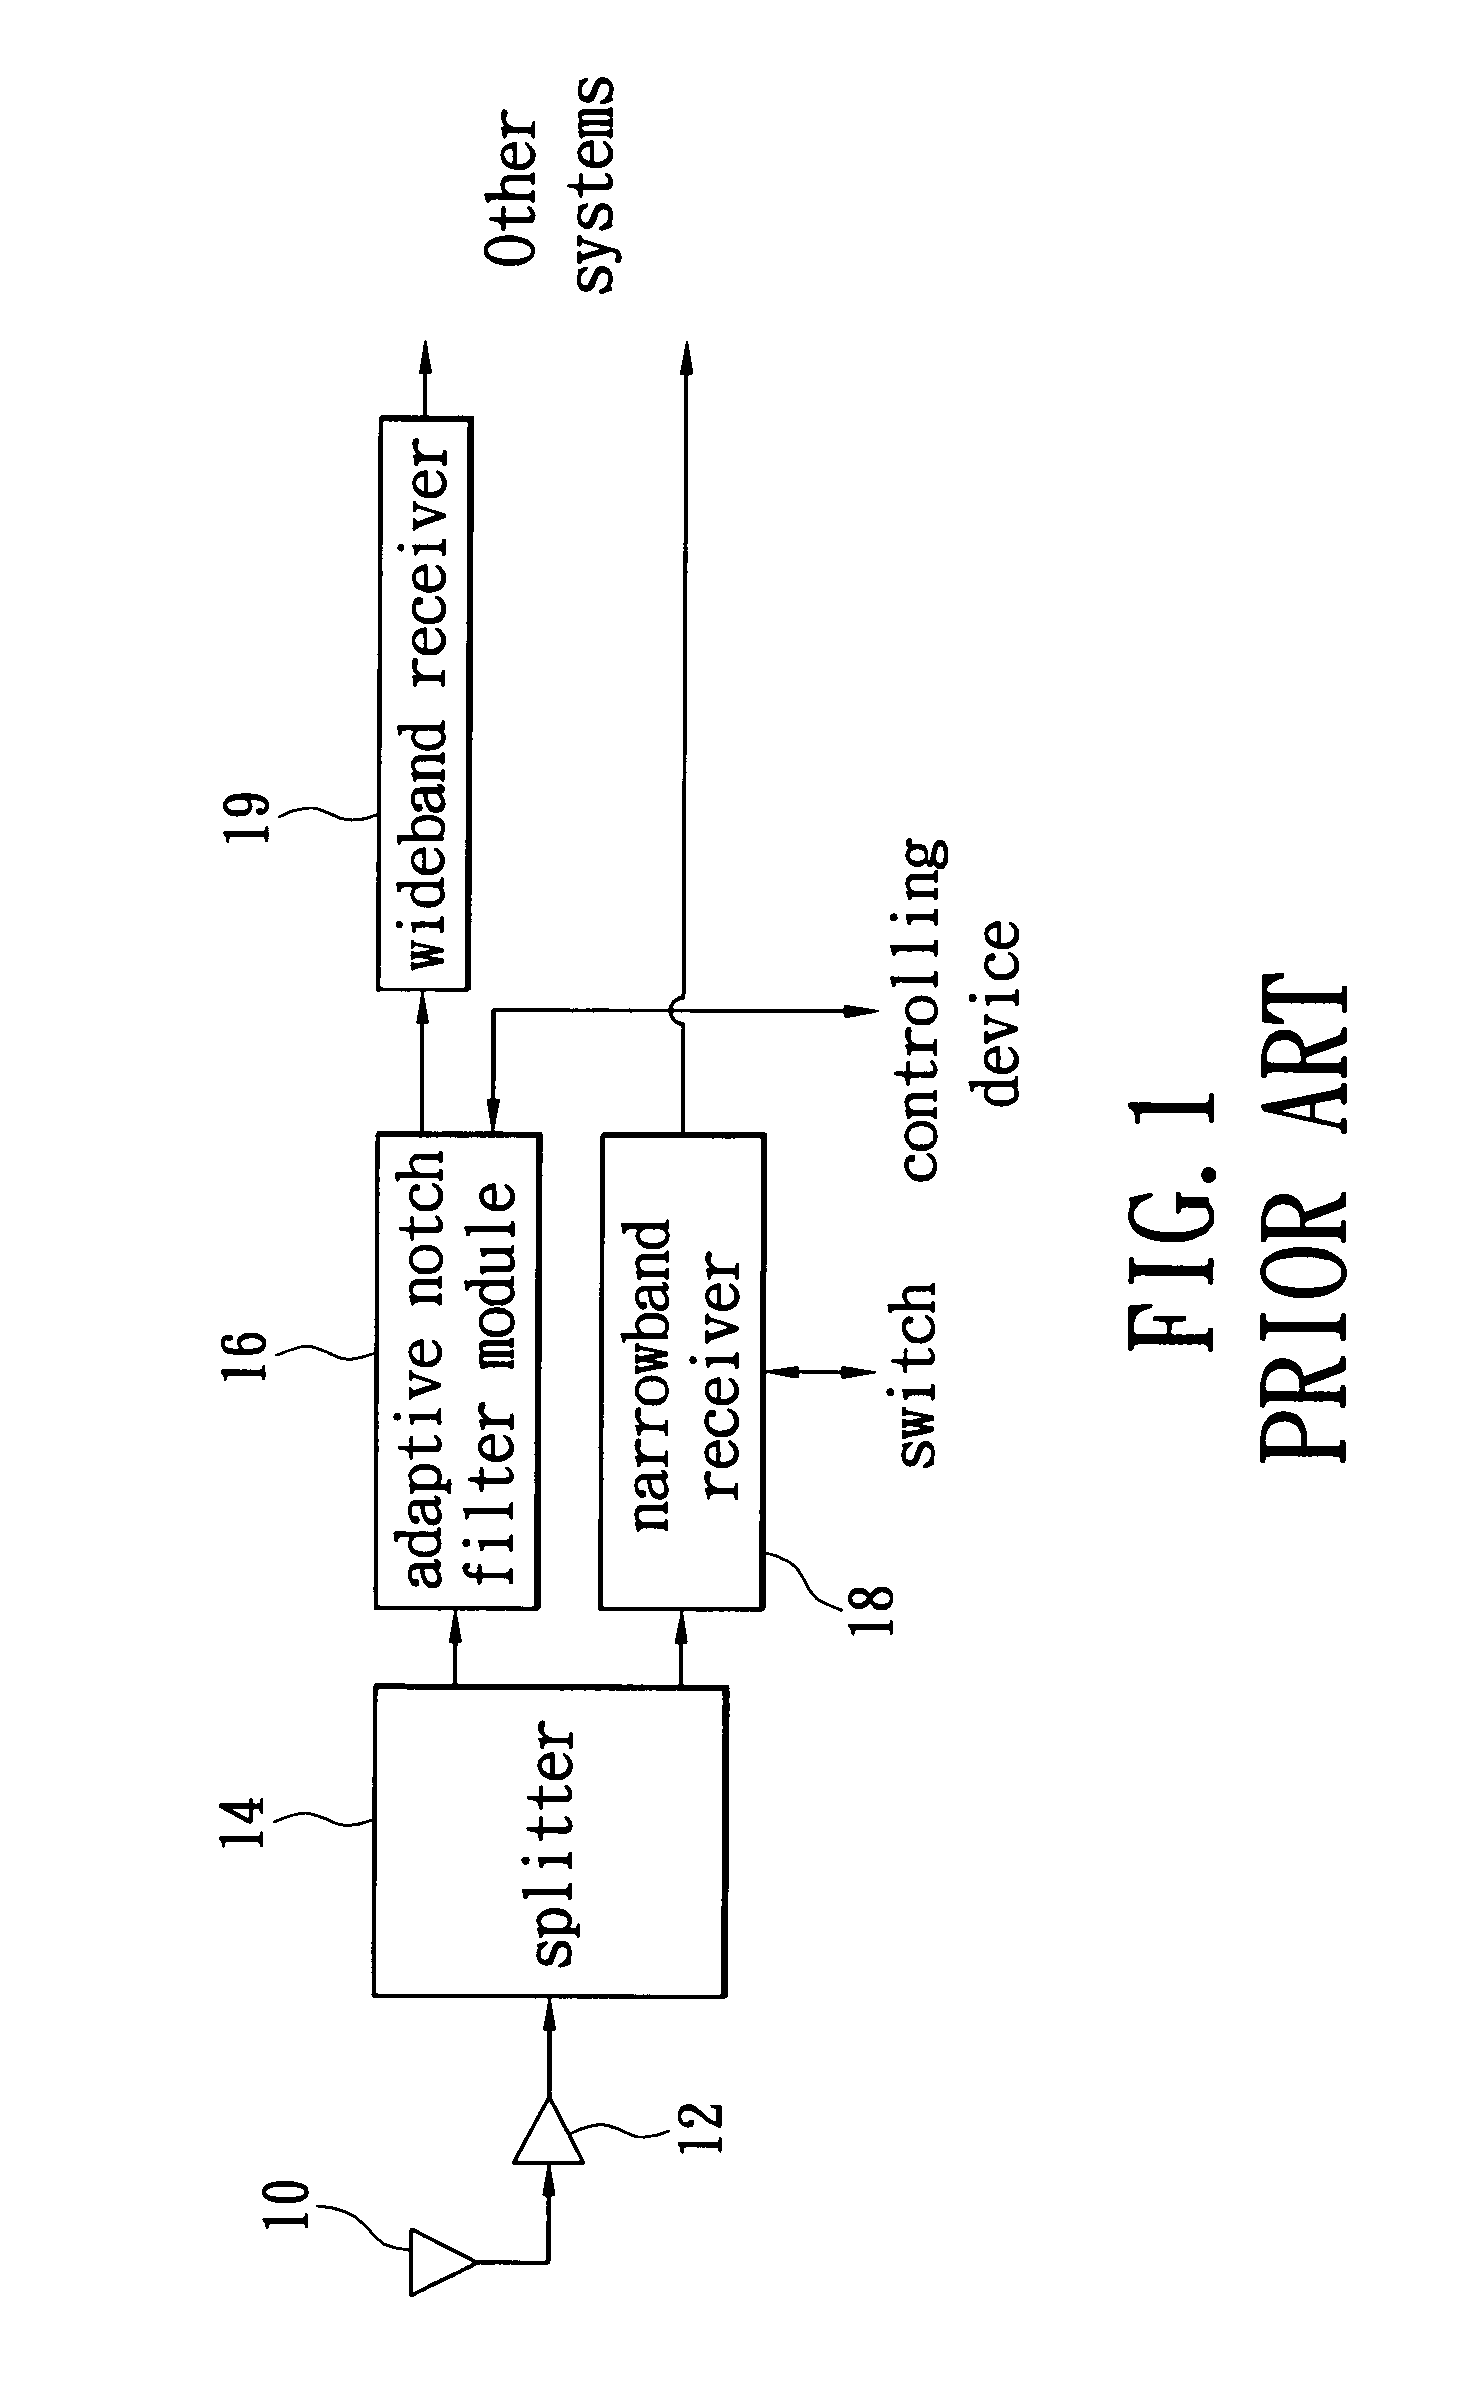 Filtering apparatus and method for dual-band sensing circuit